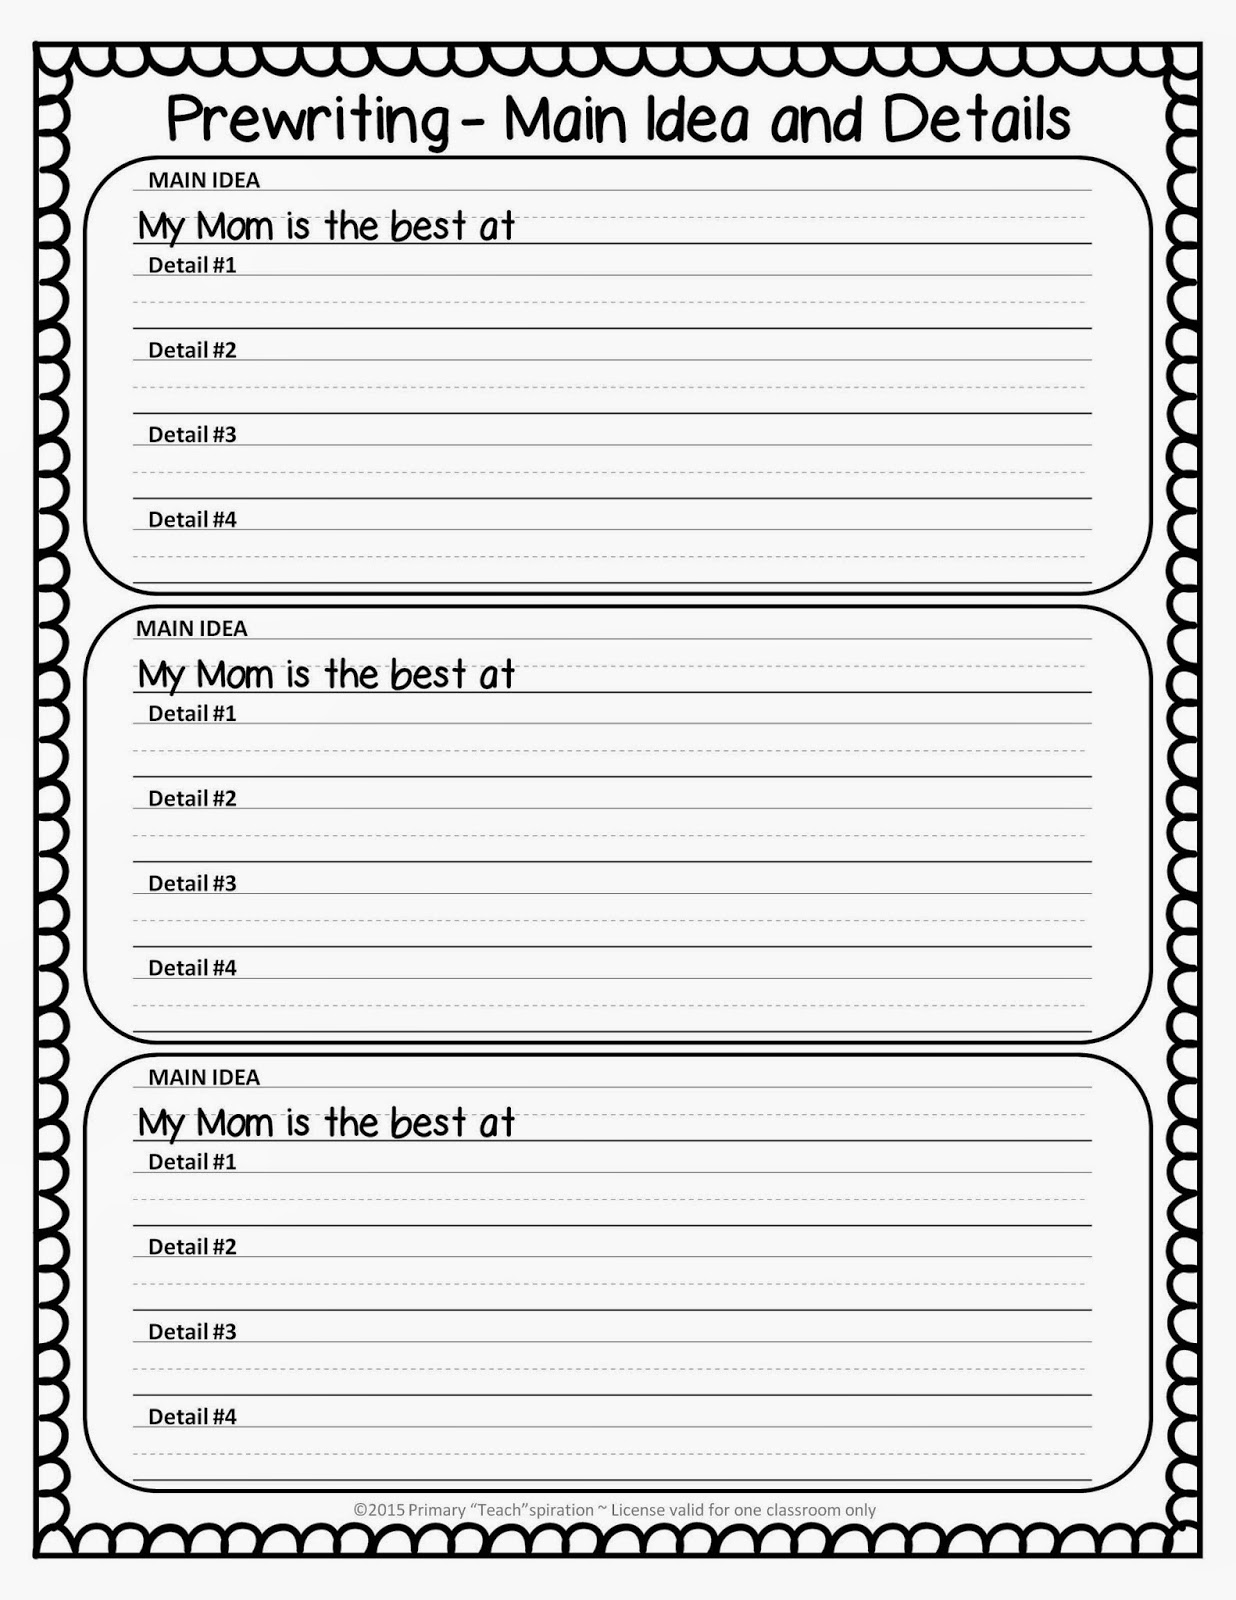 main-idea-multiple-choice-worksheets-martin-printable-calendars